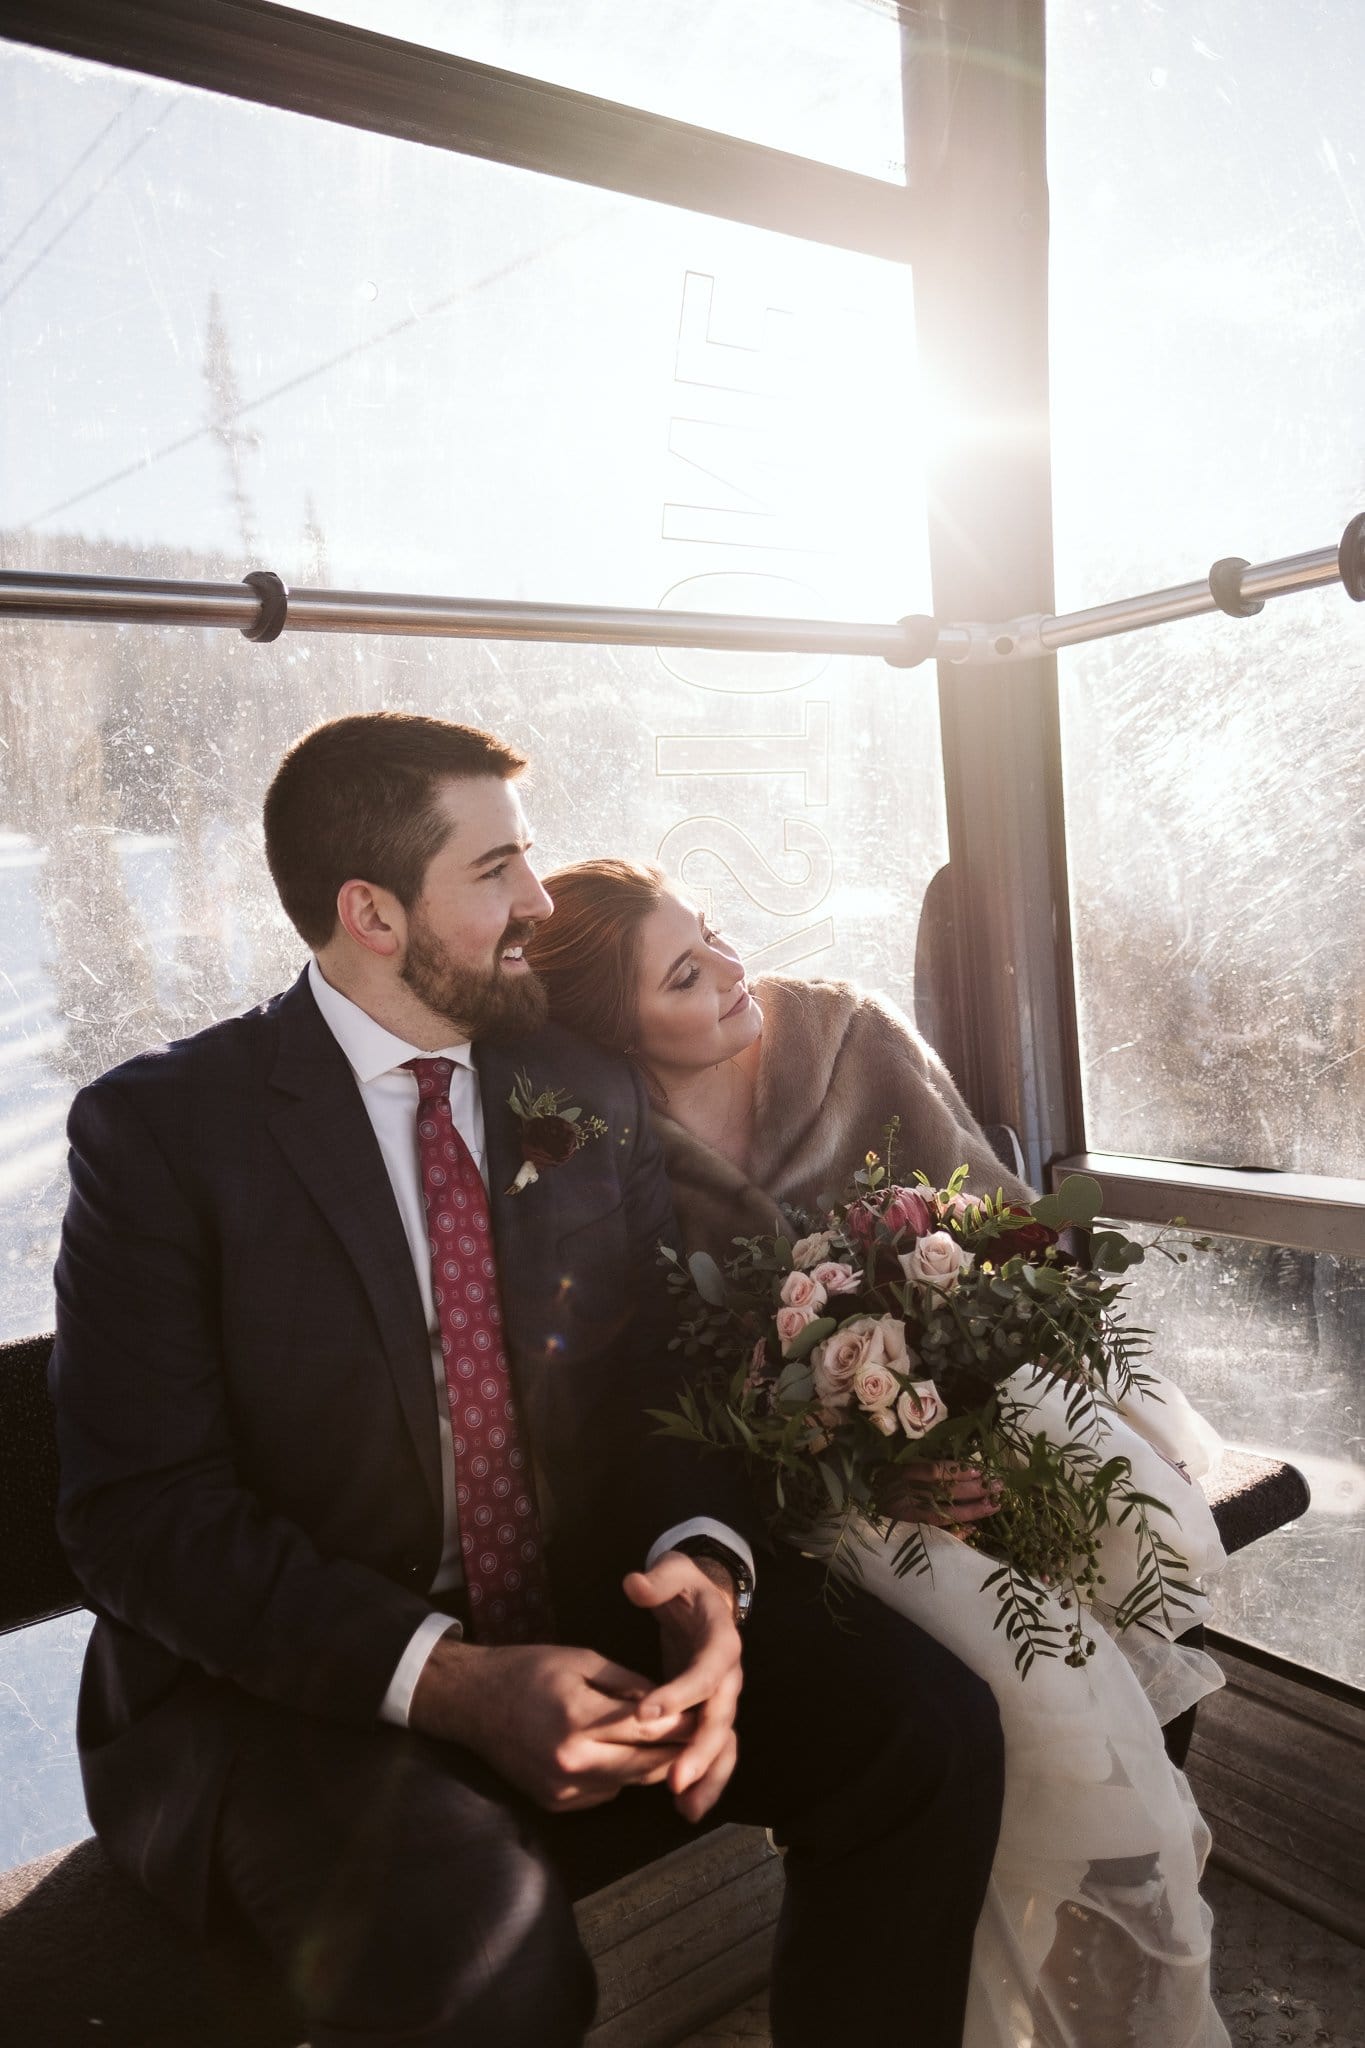 Bride and groom ride gondola at Keystone Ski Resort in Colorado for their winter wedding.